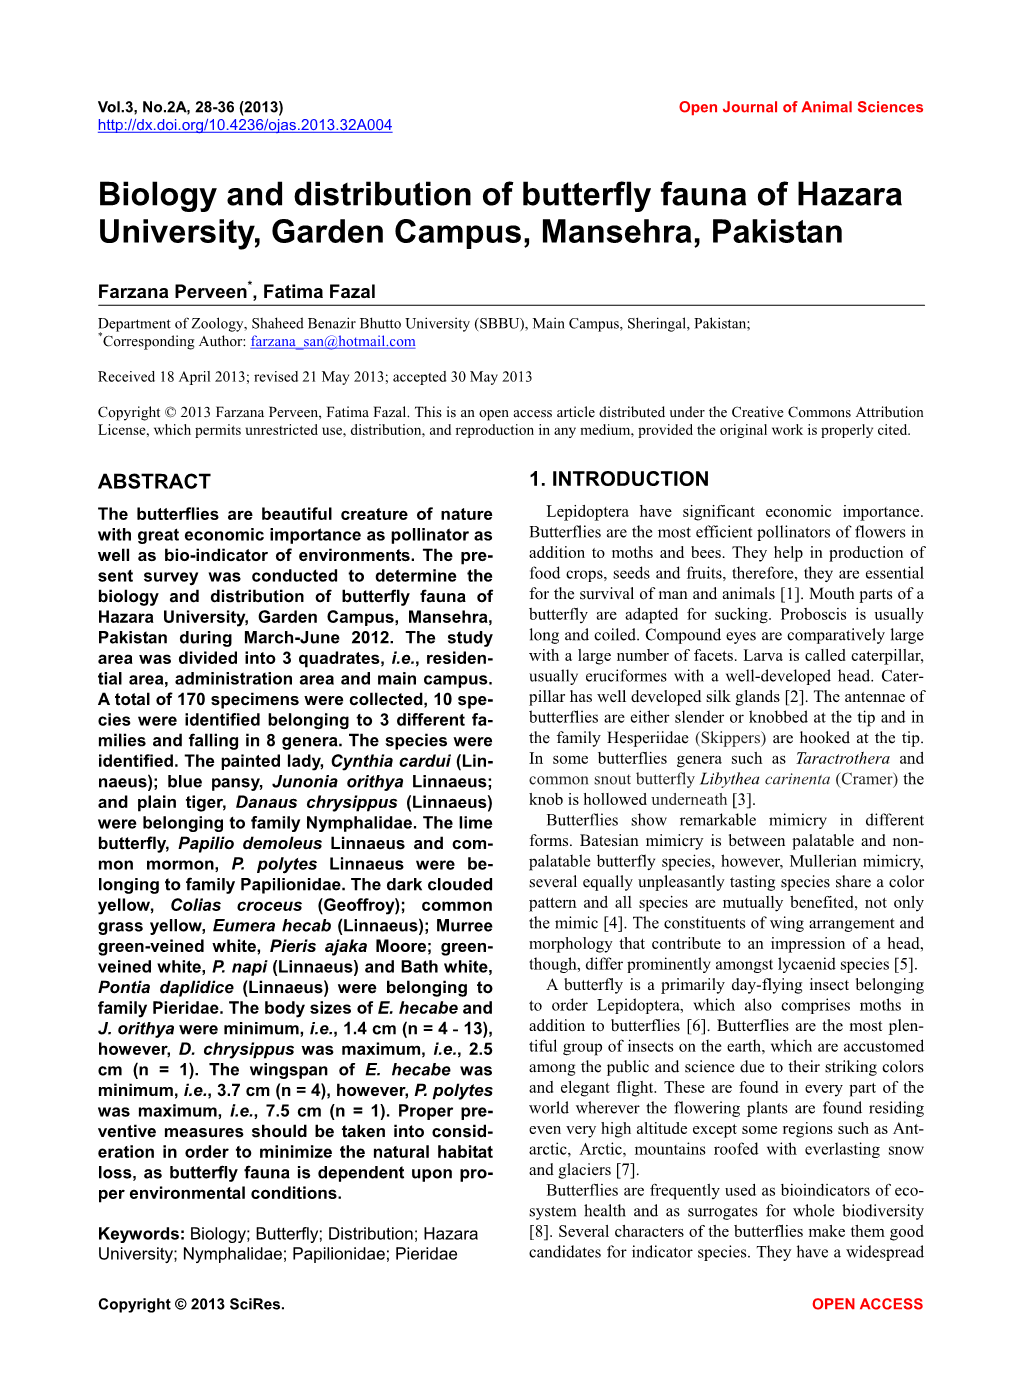 Biology and Distribution of Butterfly Fauna of Hazara University, Garden Campus, Mansehra, Pakistan